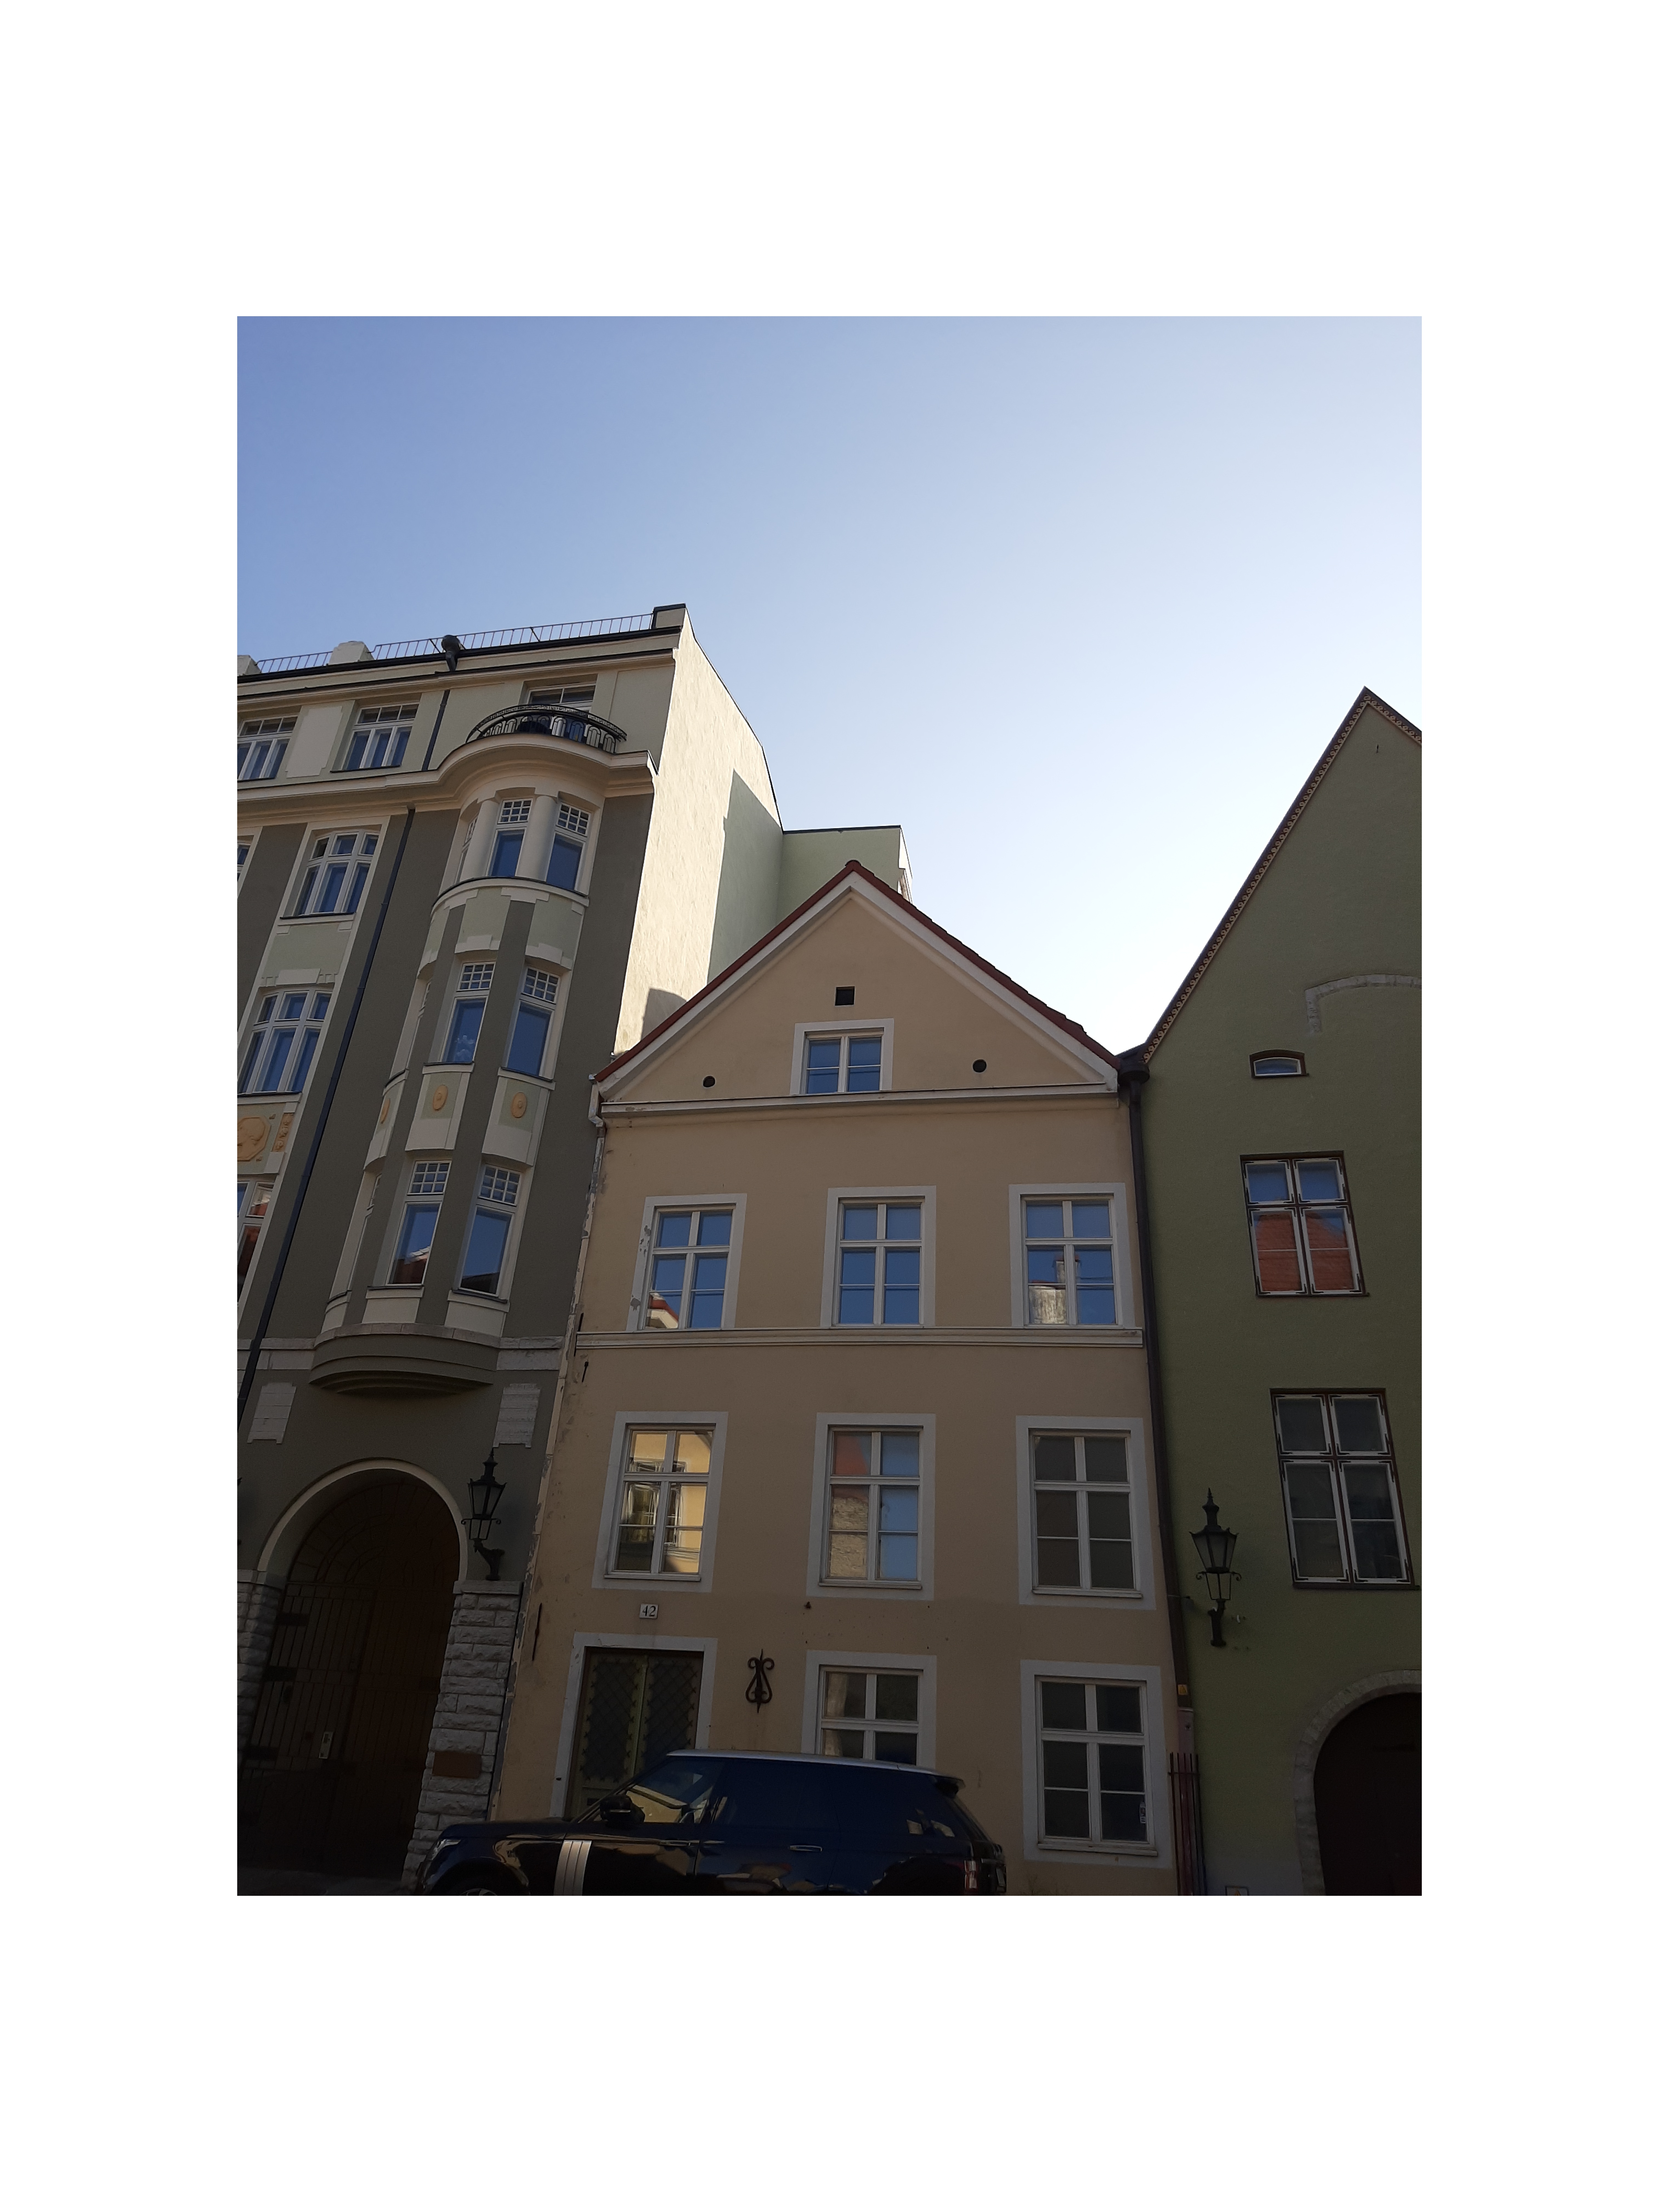 Buildings in Tallinn Old Town Laial Street rephoto